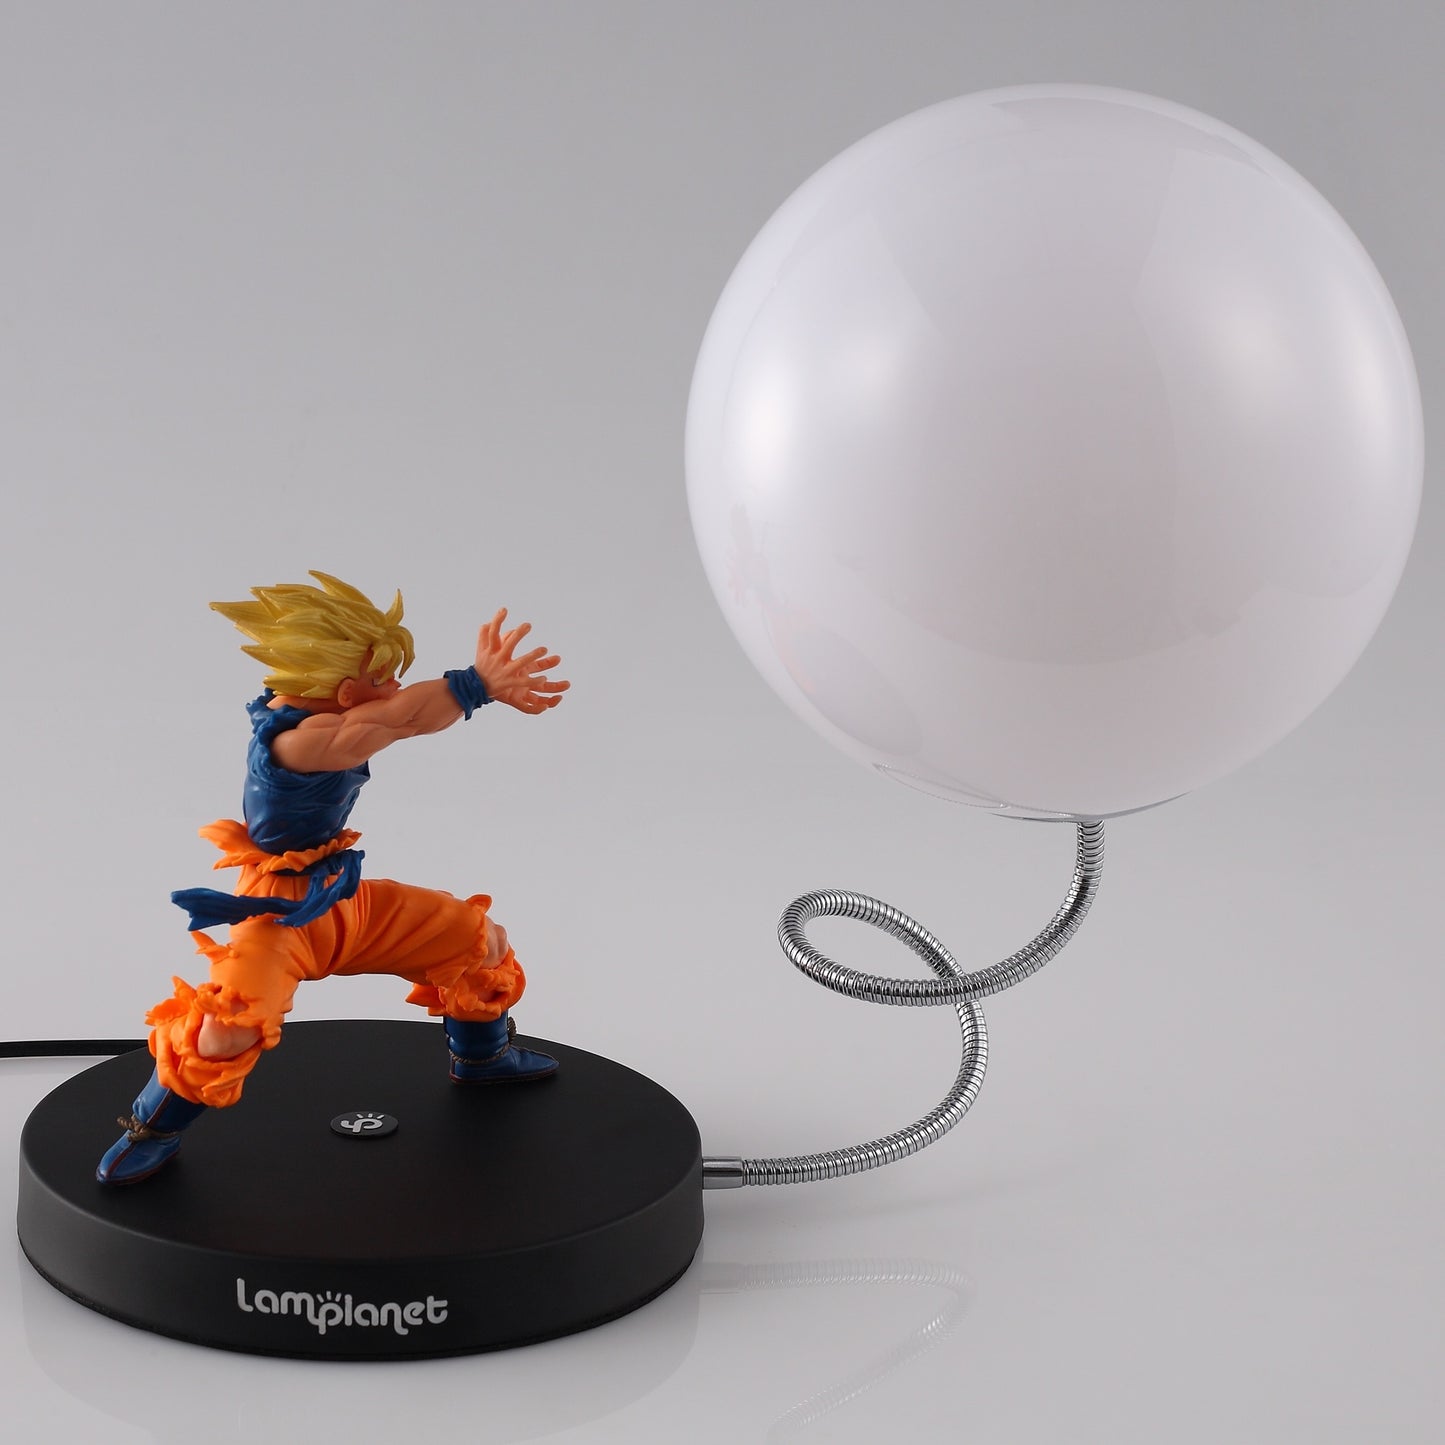 Dragon Ball Z Goku Kamehameha Lamp - Super Anime Store FREE SHIPPING FAST SHIPPING USA